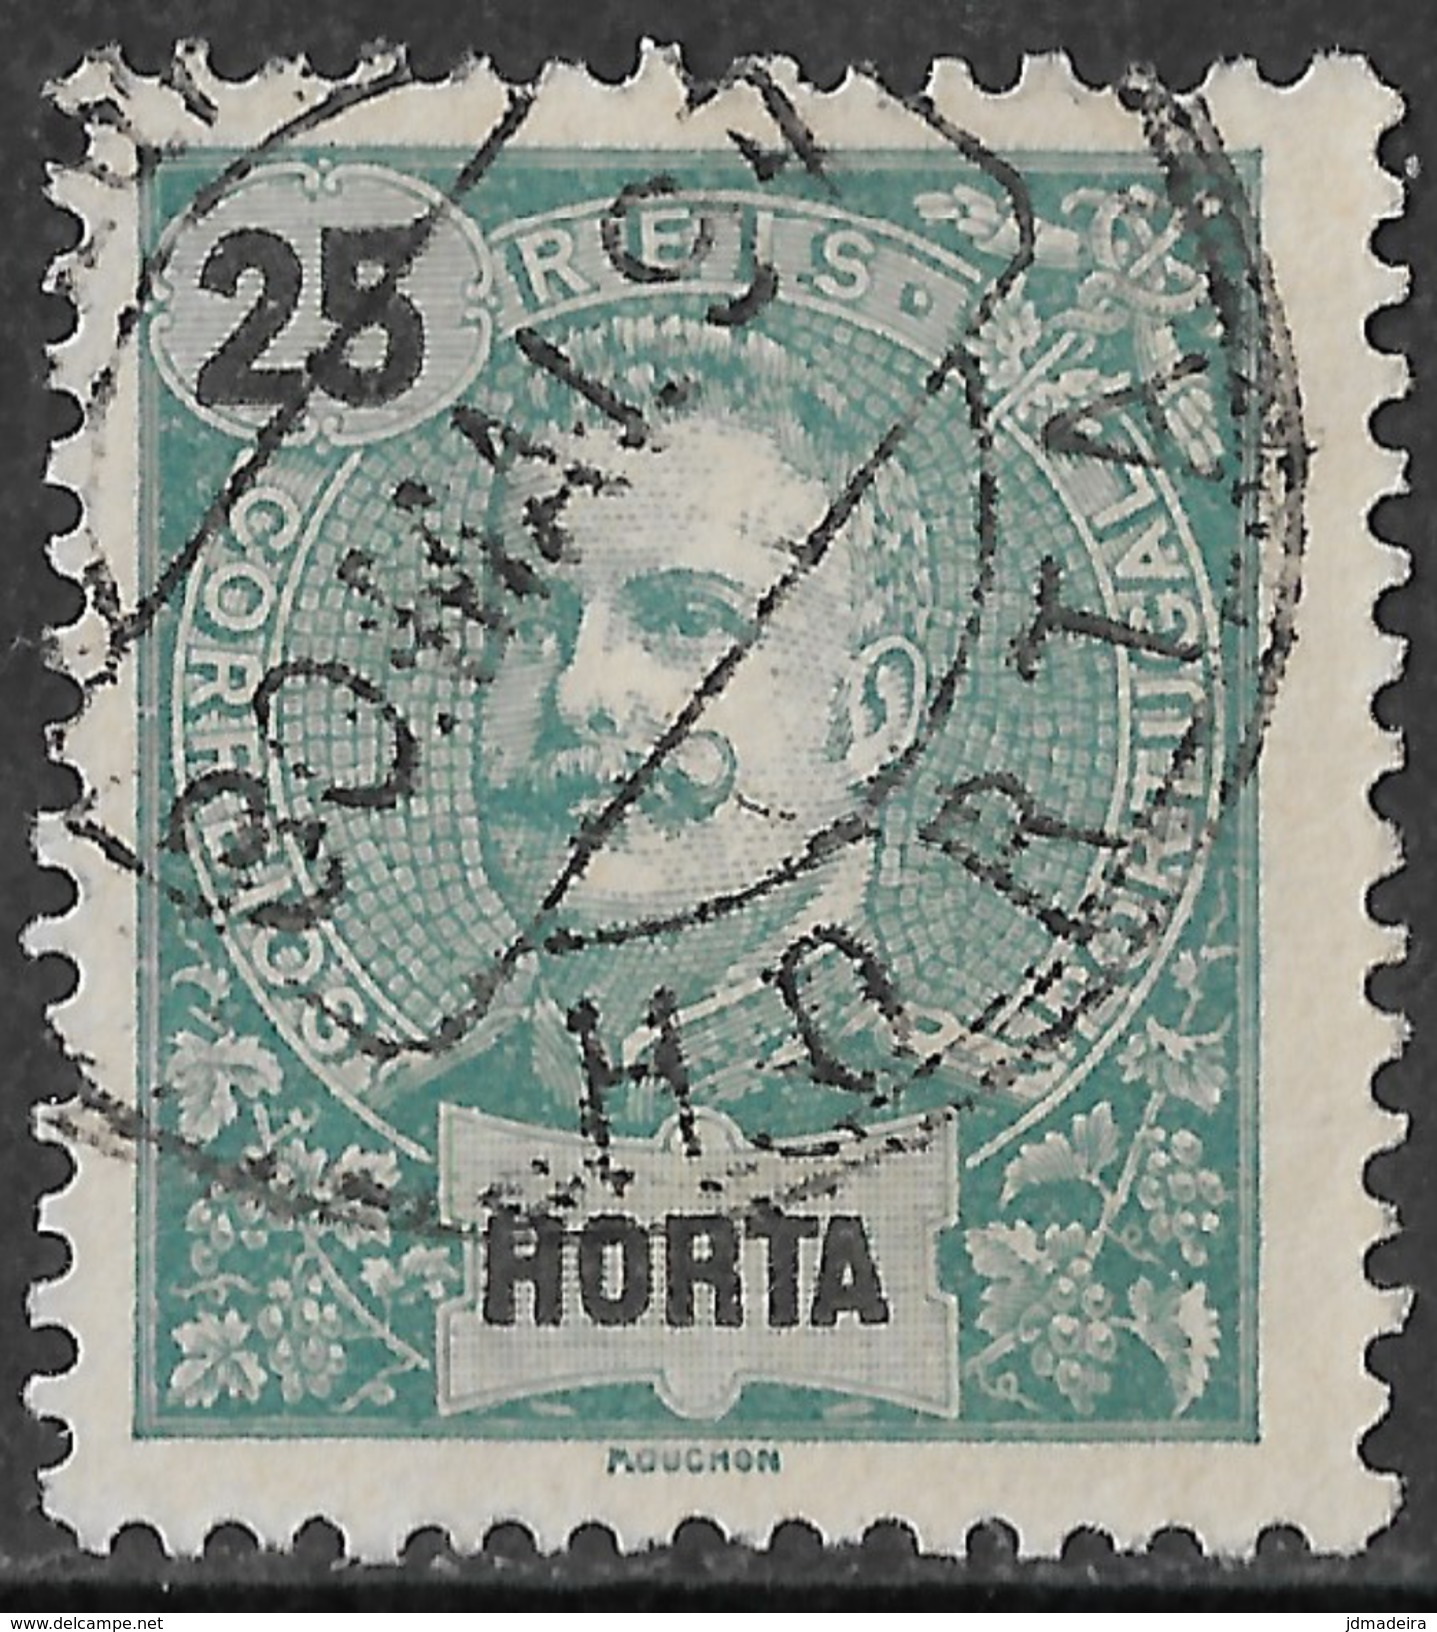 Horta – 1897 King Carlos 25 Réis Used Stamp - Horta